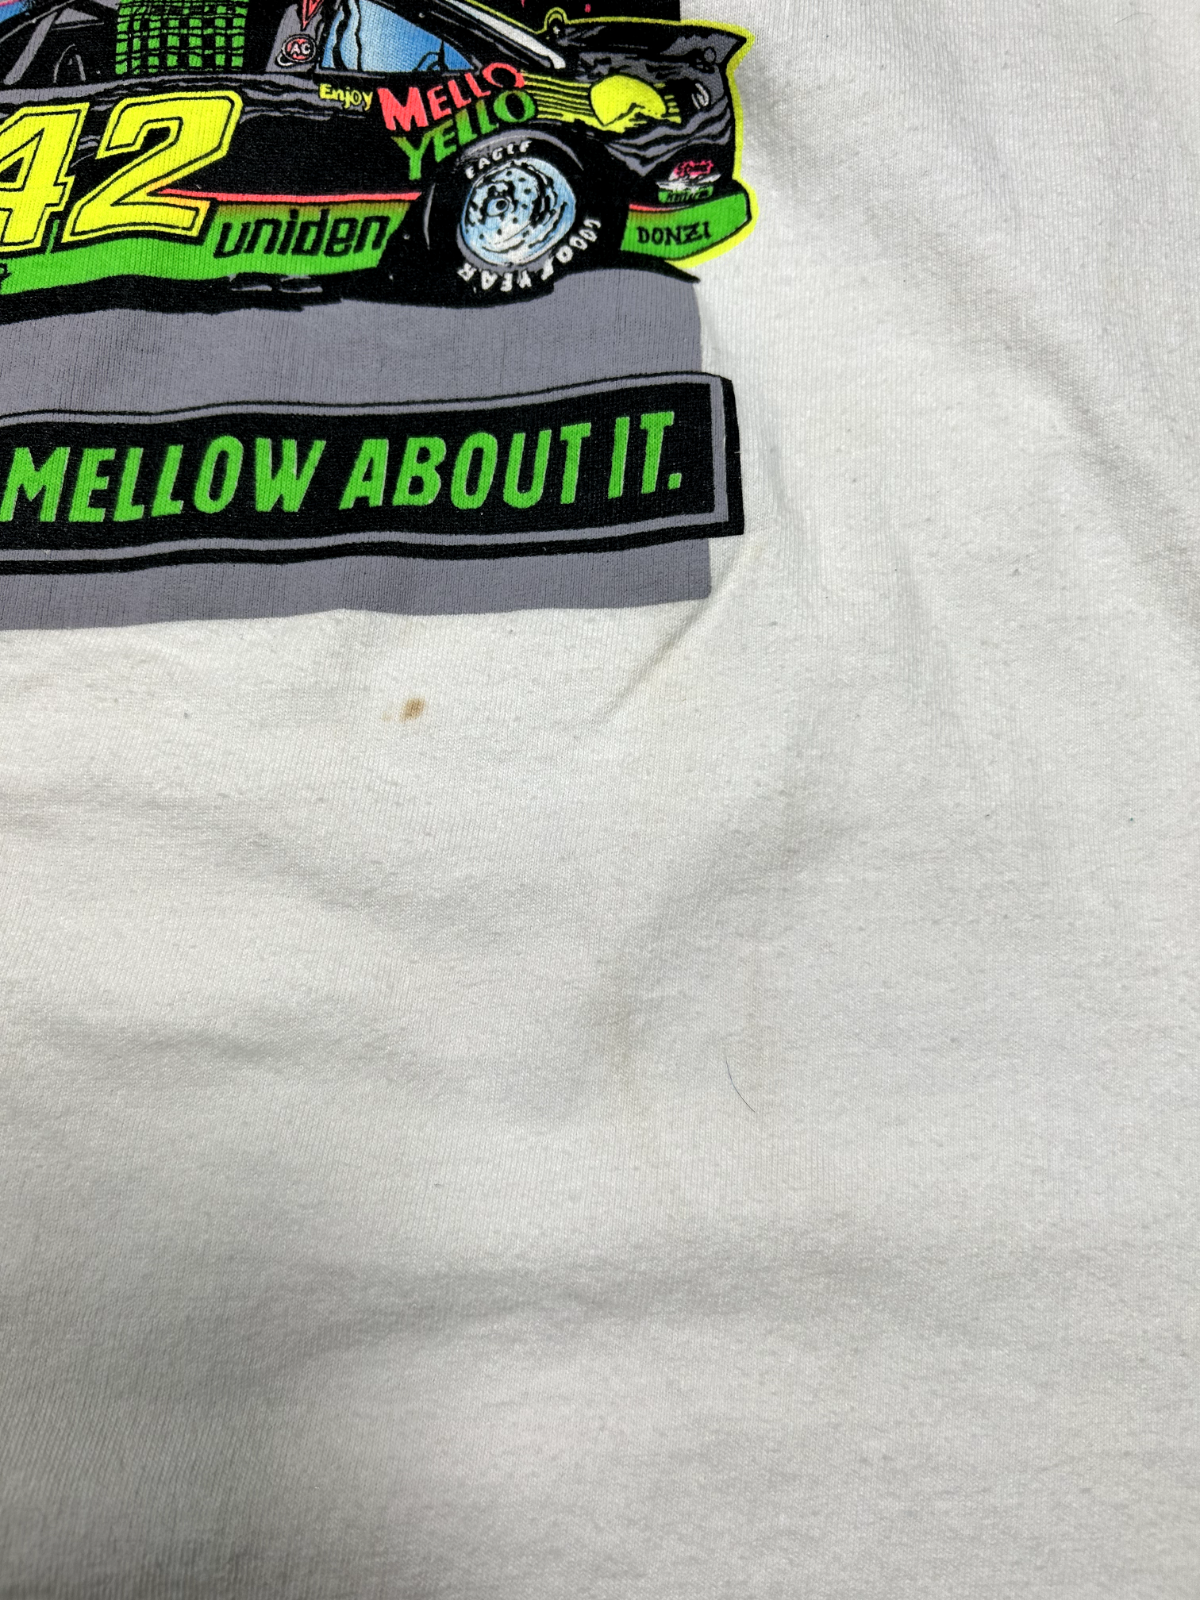 Vintage 1992 Kyle Petty #42 Mello Yello Nascar Racing T-Shirt Size Large 90s